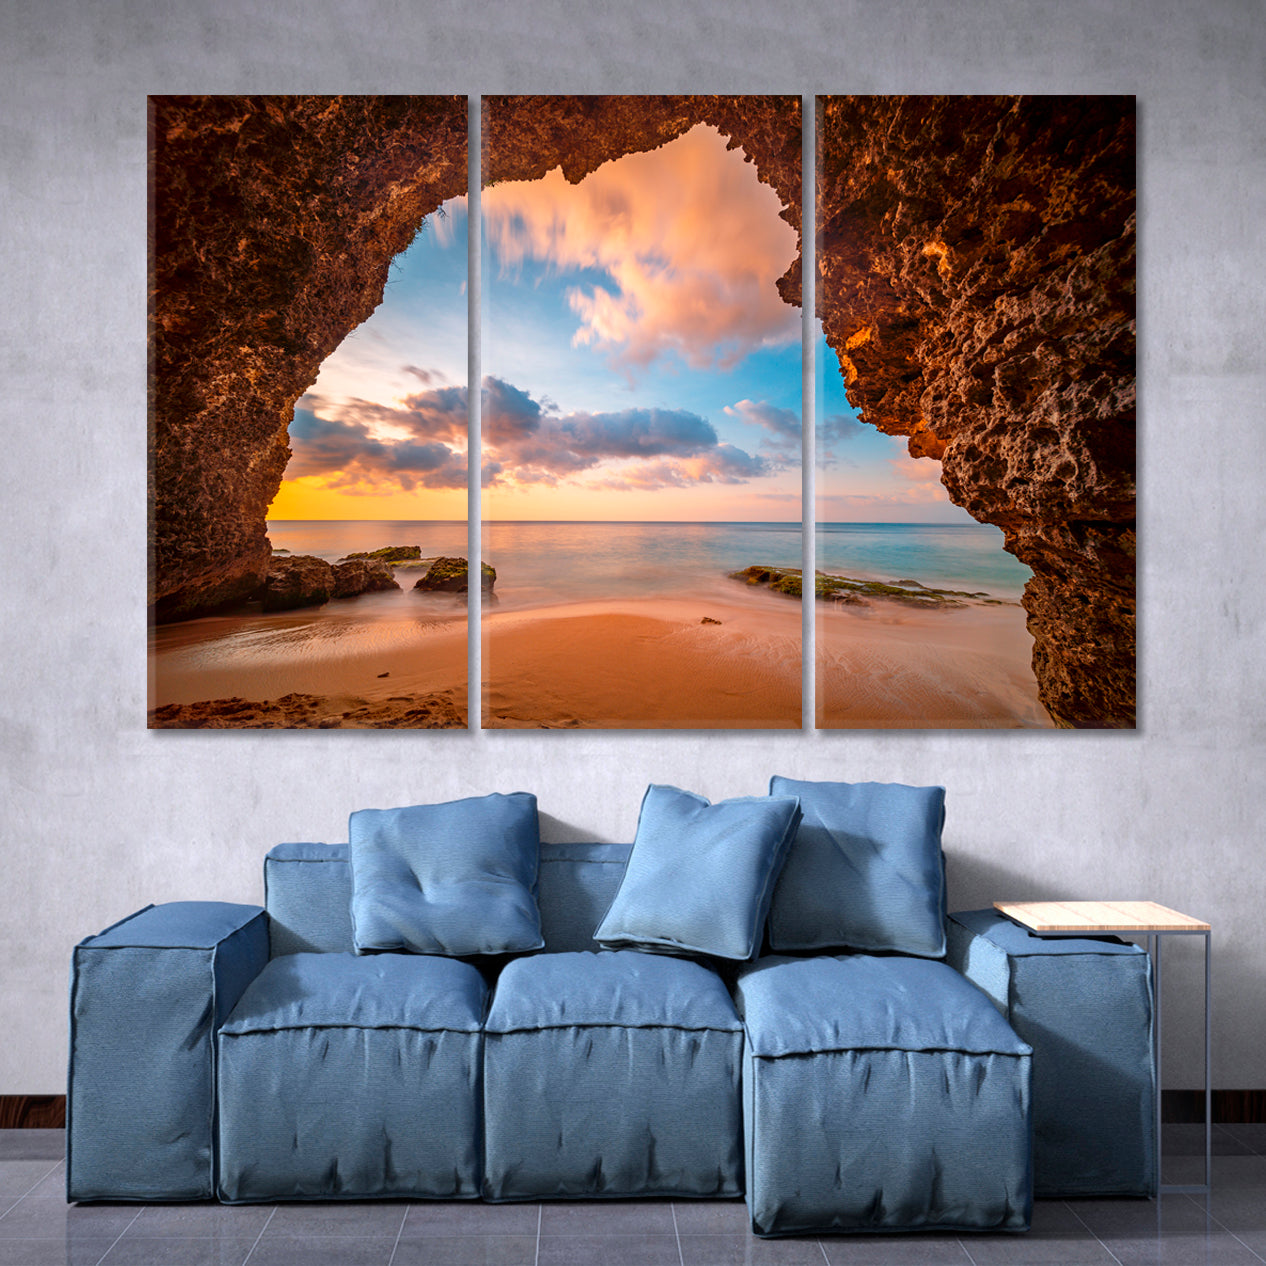 VIEW FROM CAVE Gorgeous Tropical Landscape Scenery Landscape Fine Art Print Artesty 3 panels 36" x 24" 